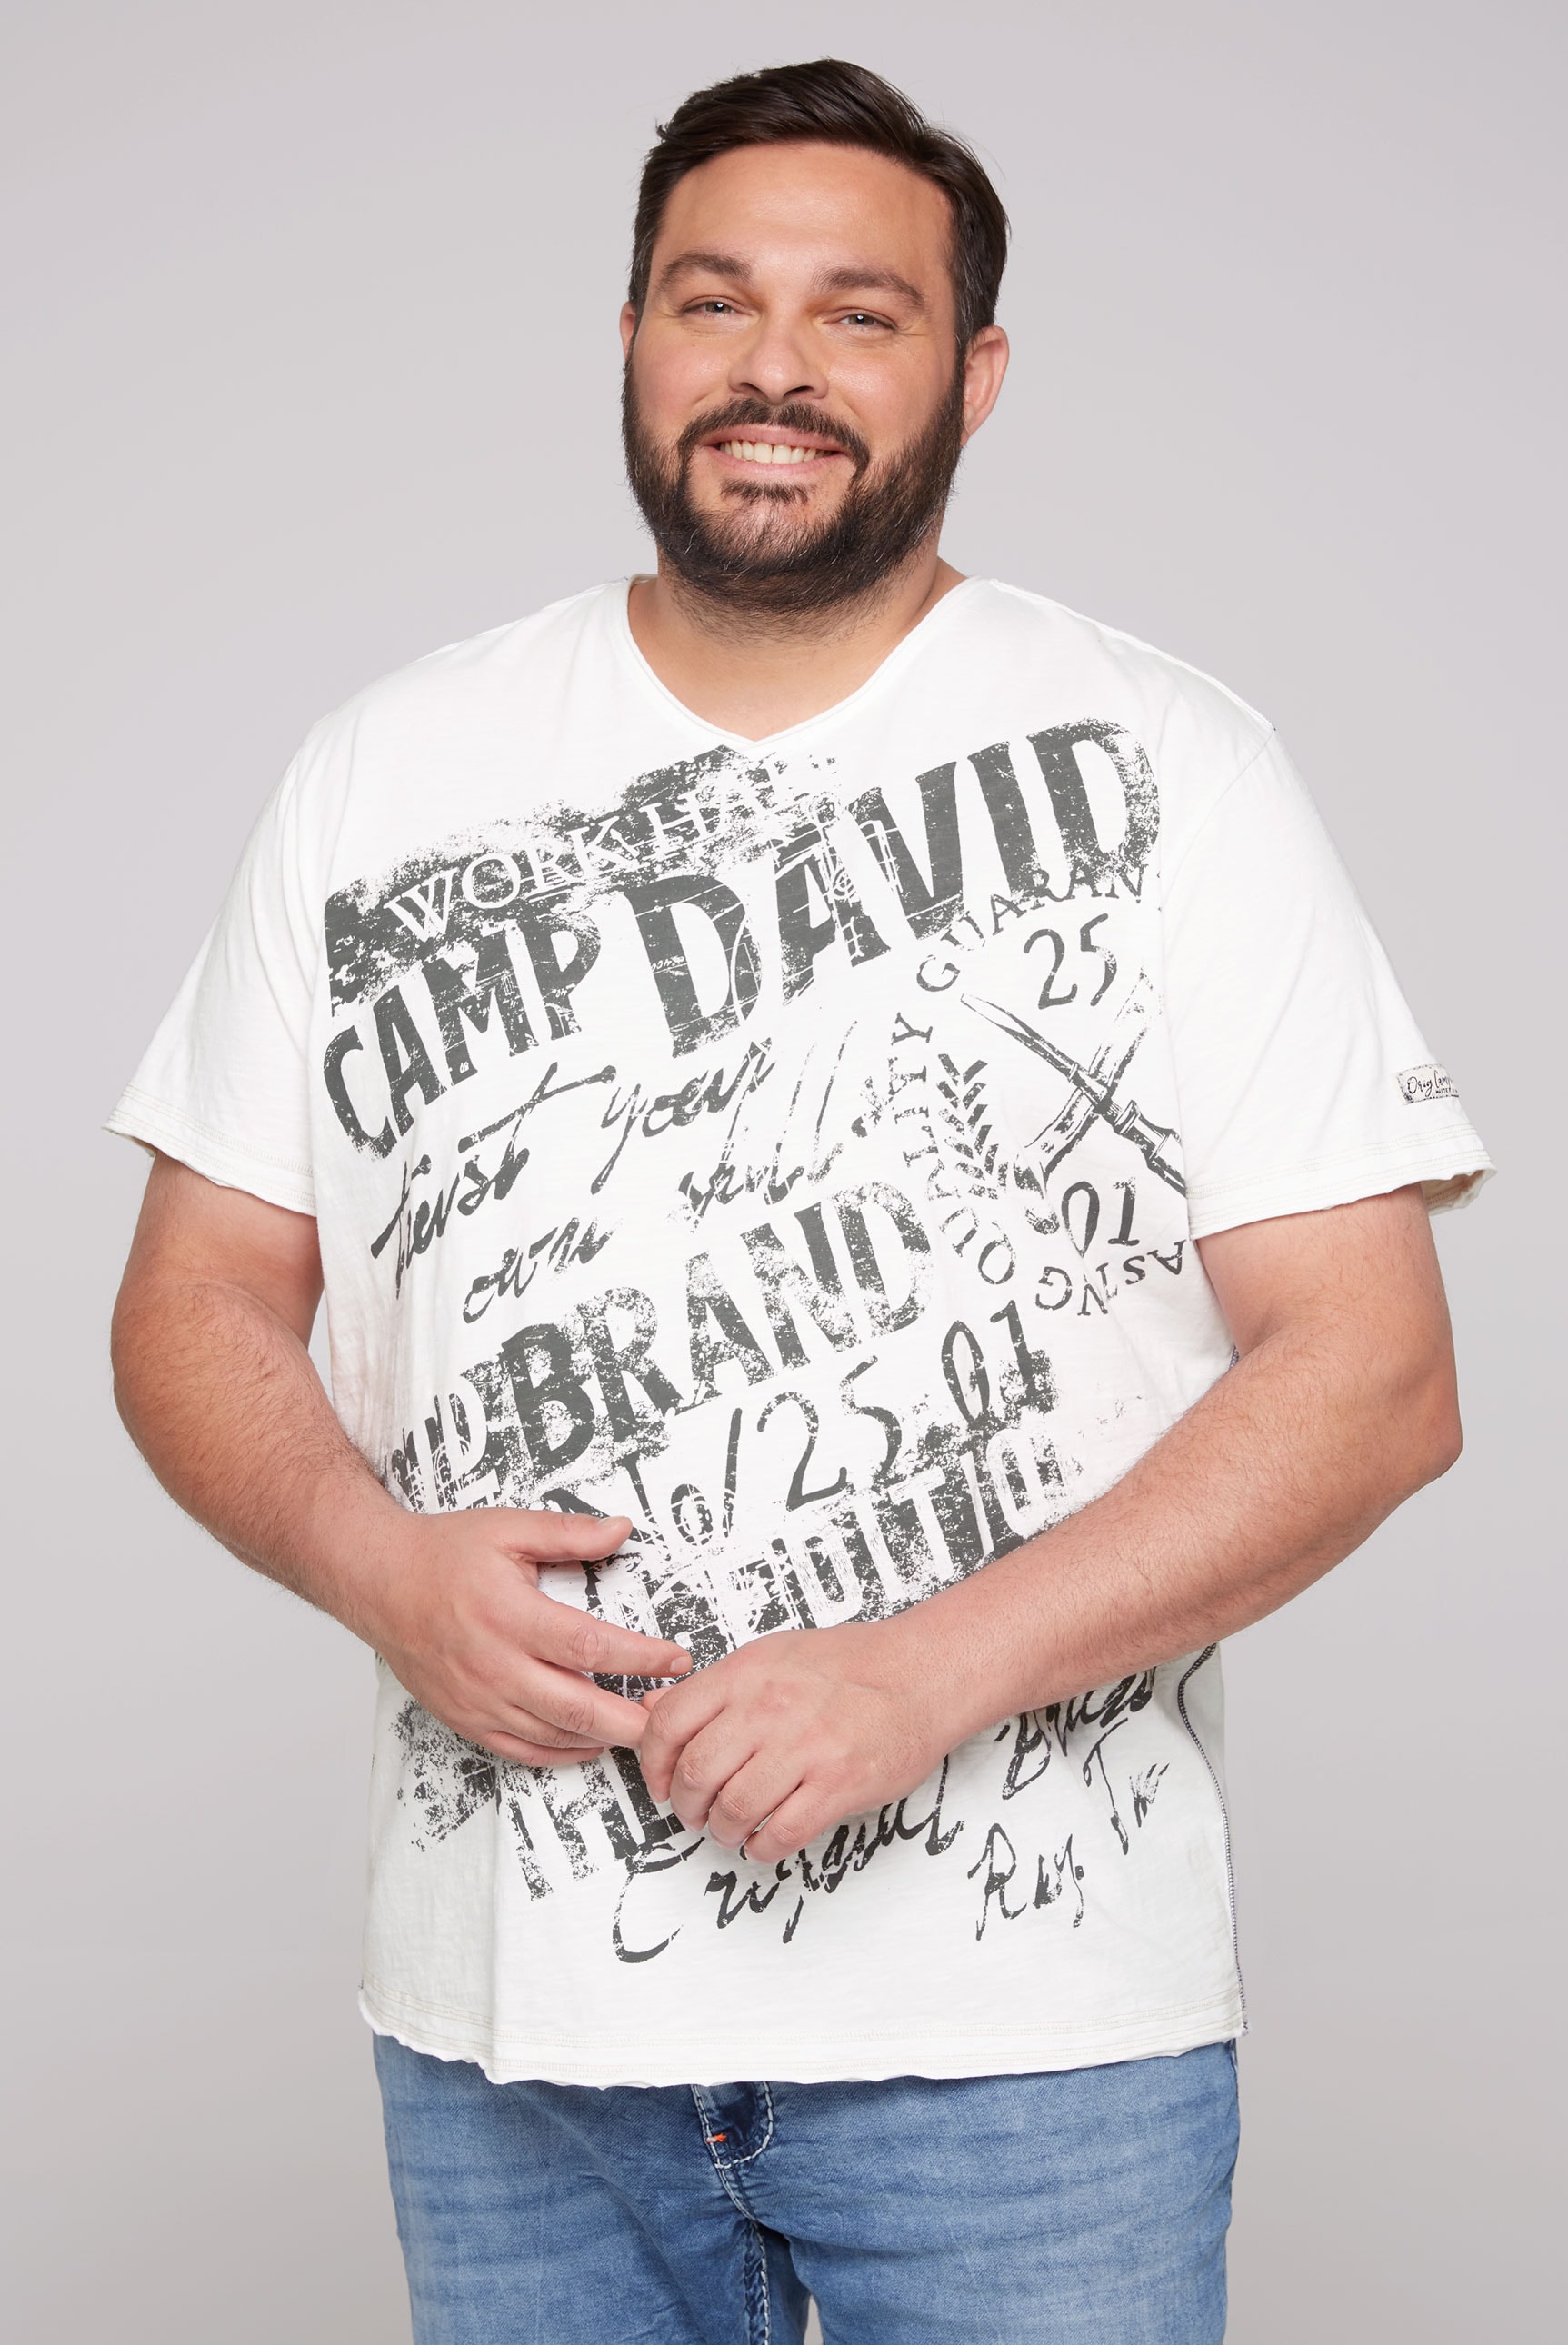 CAMP DAVID T-Shirt von CAMP DAVID